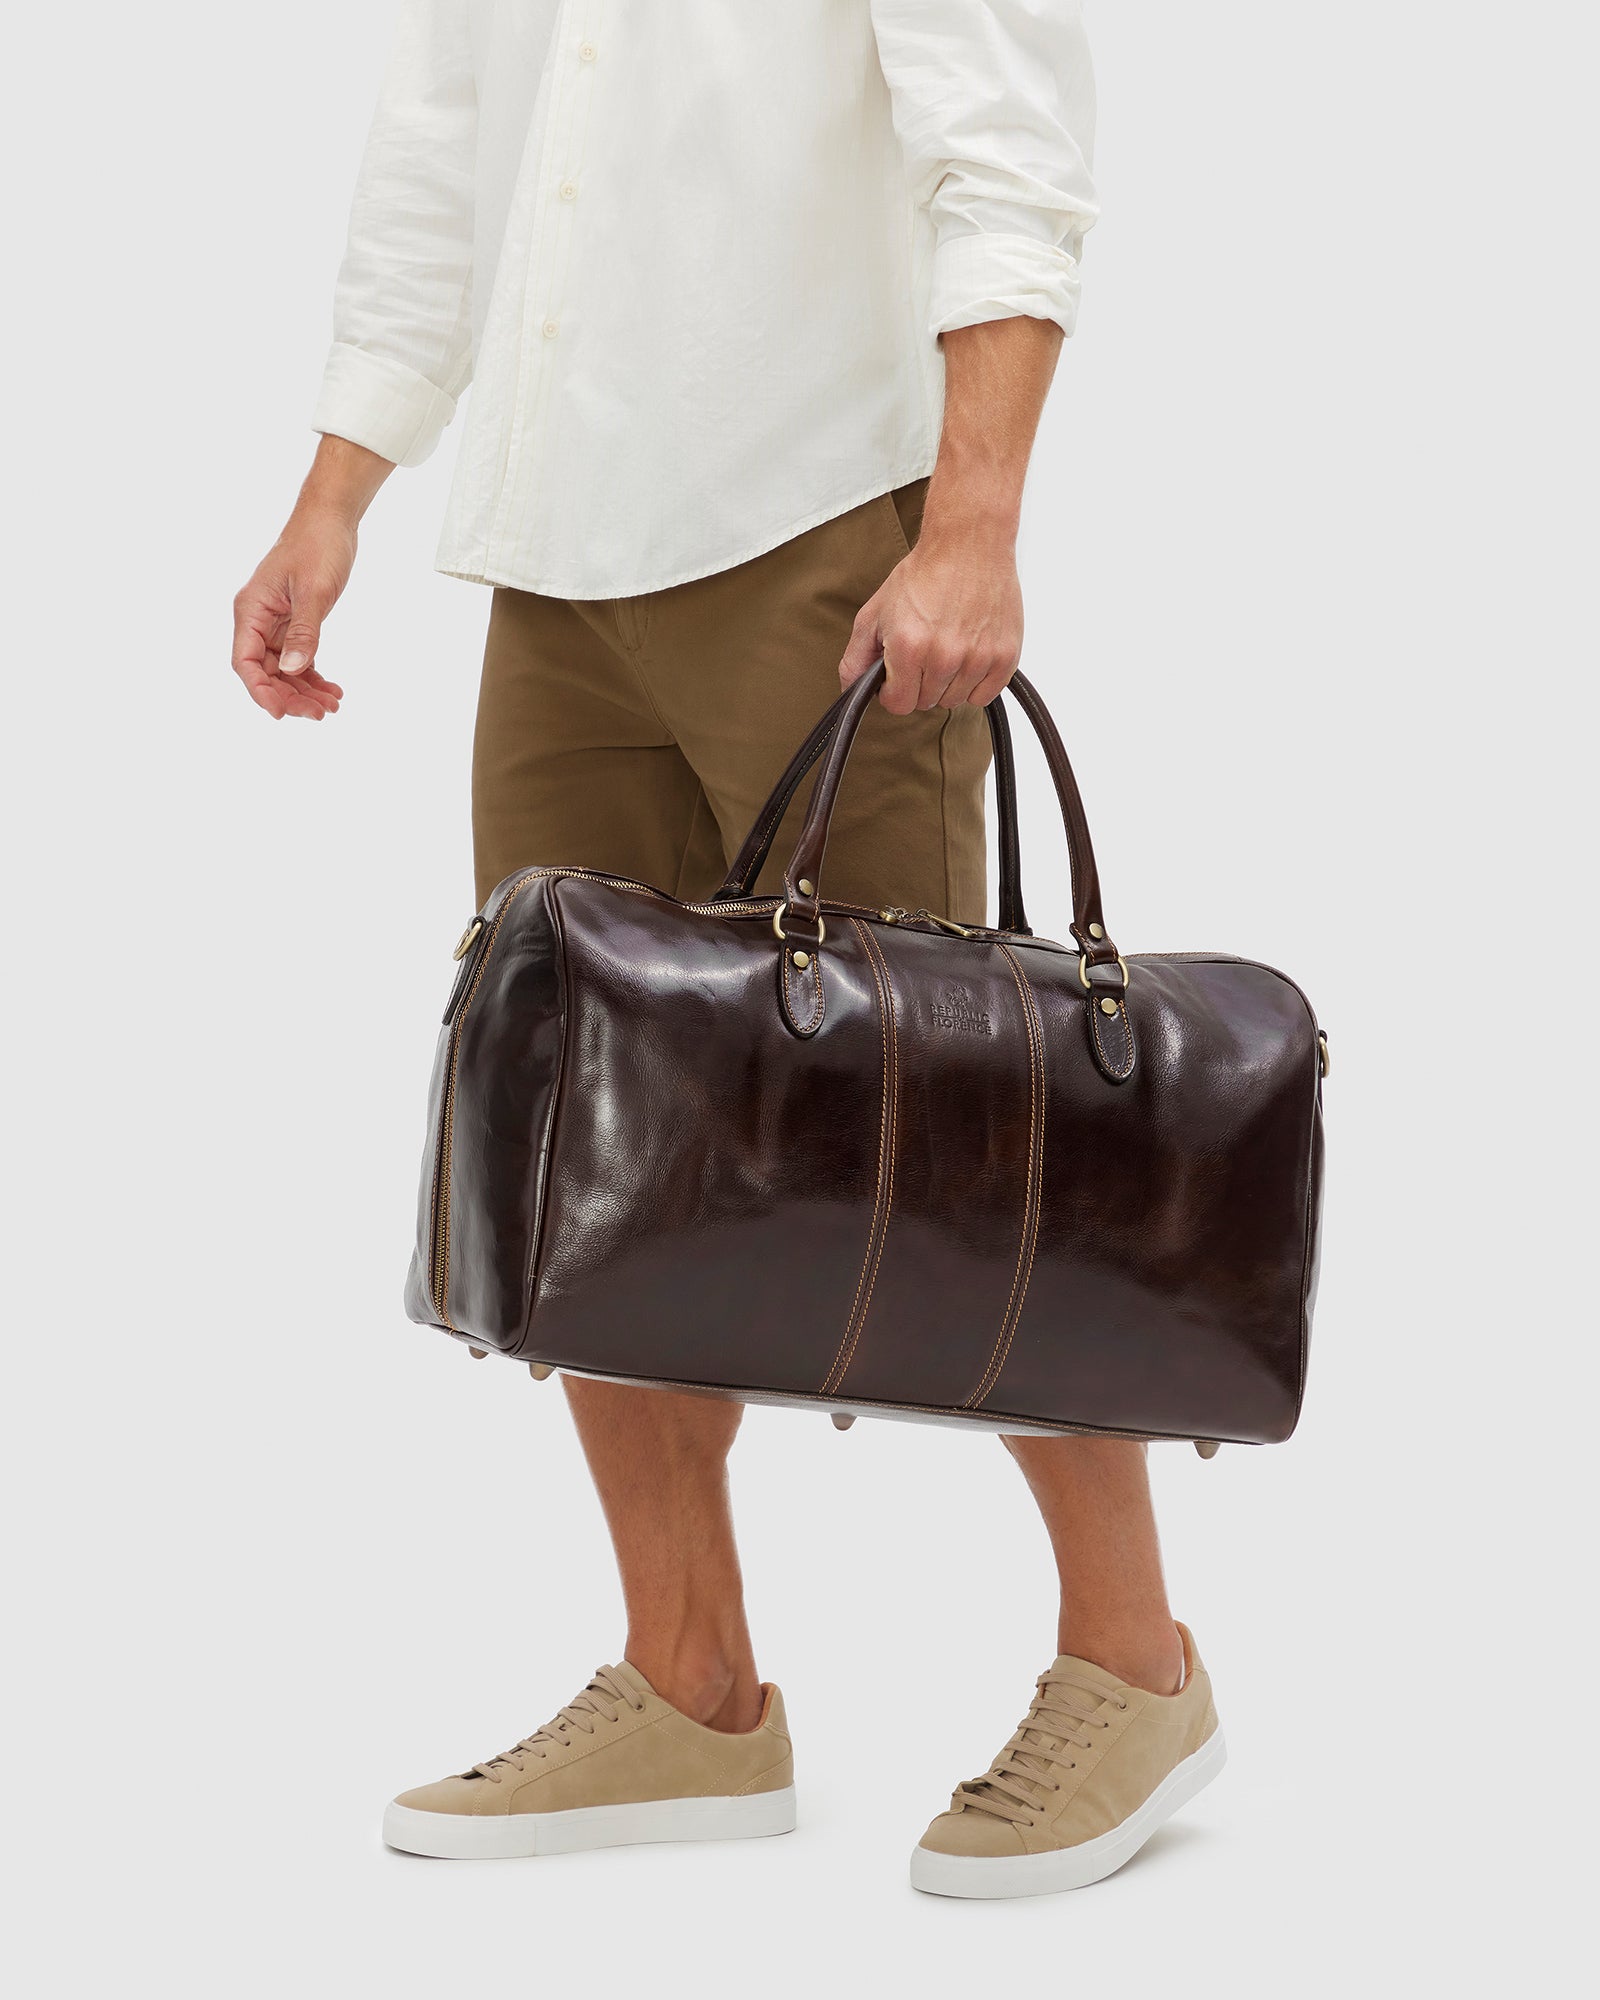 Albertis Chocolate - Leather Duffle Bag